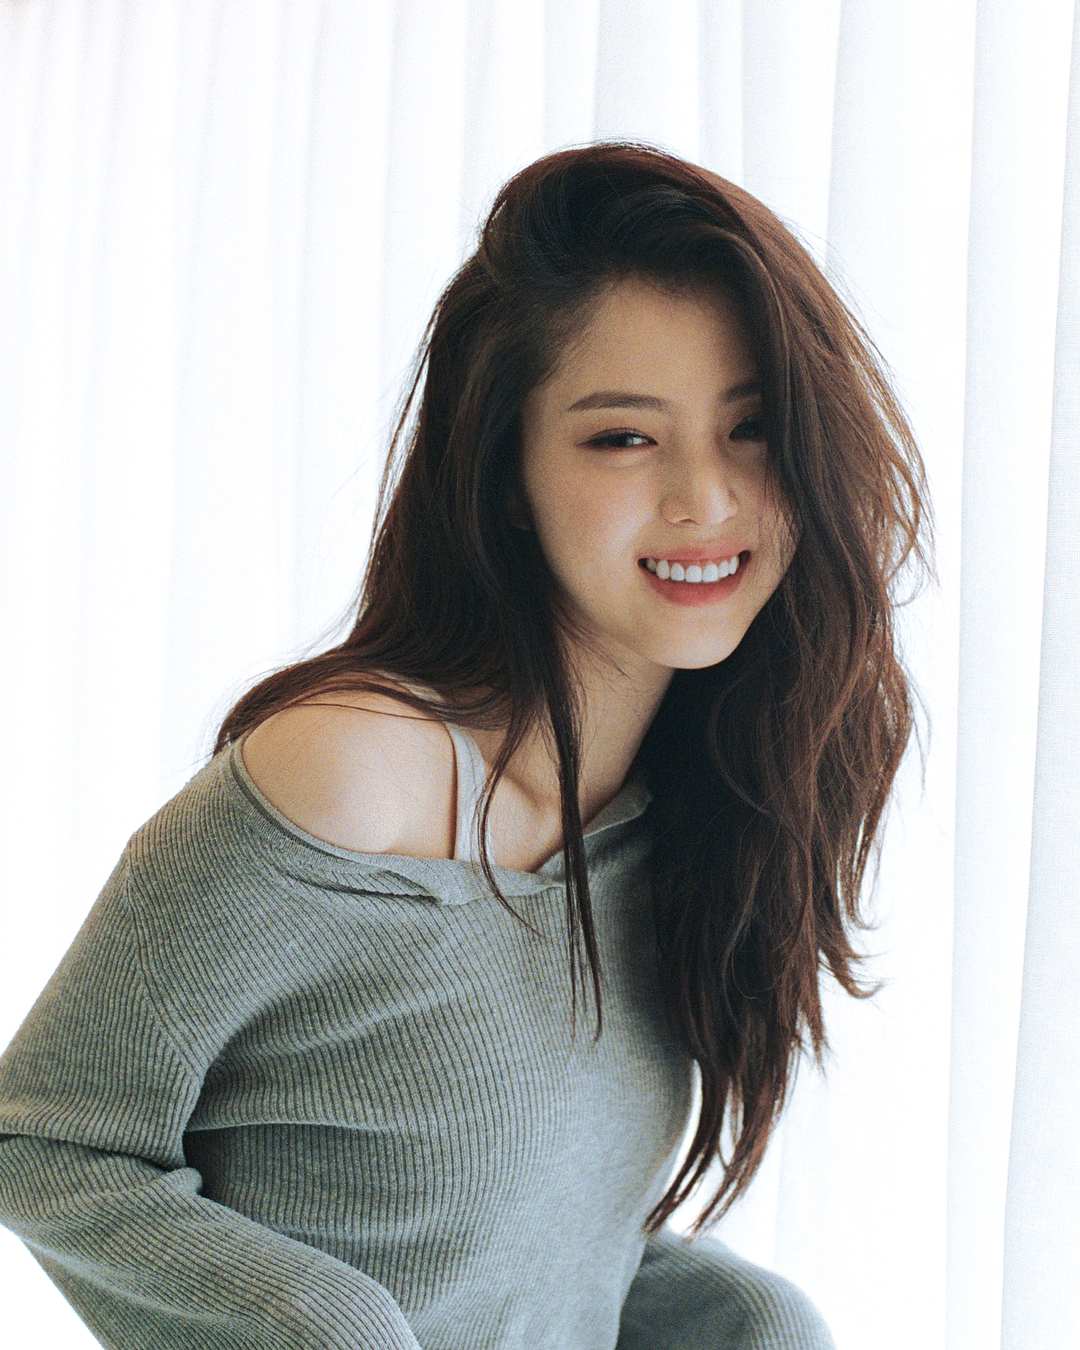 Meski dibenci dalam film, 10 Pesona Cantik Han So Hee Ini Mampu Memikat Hati